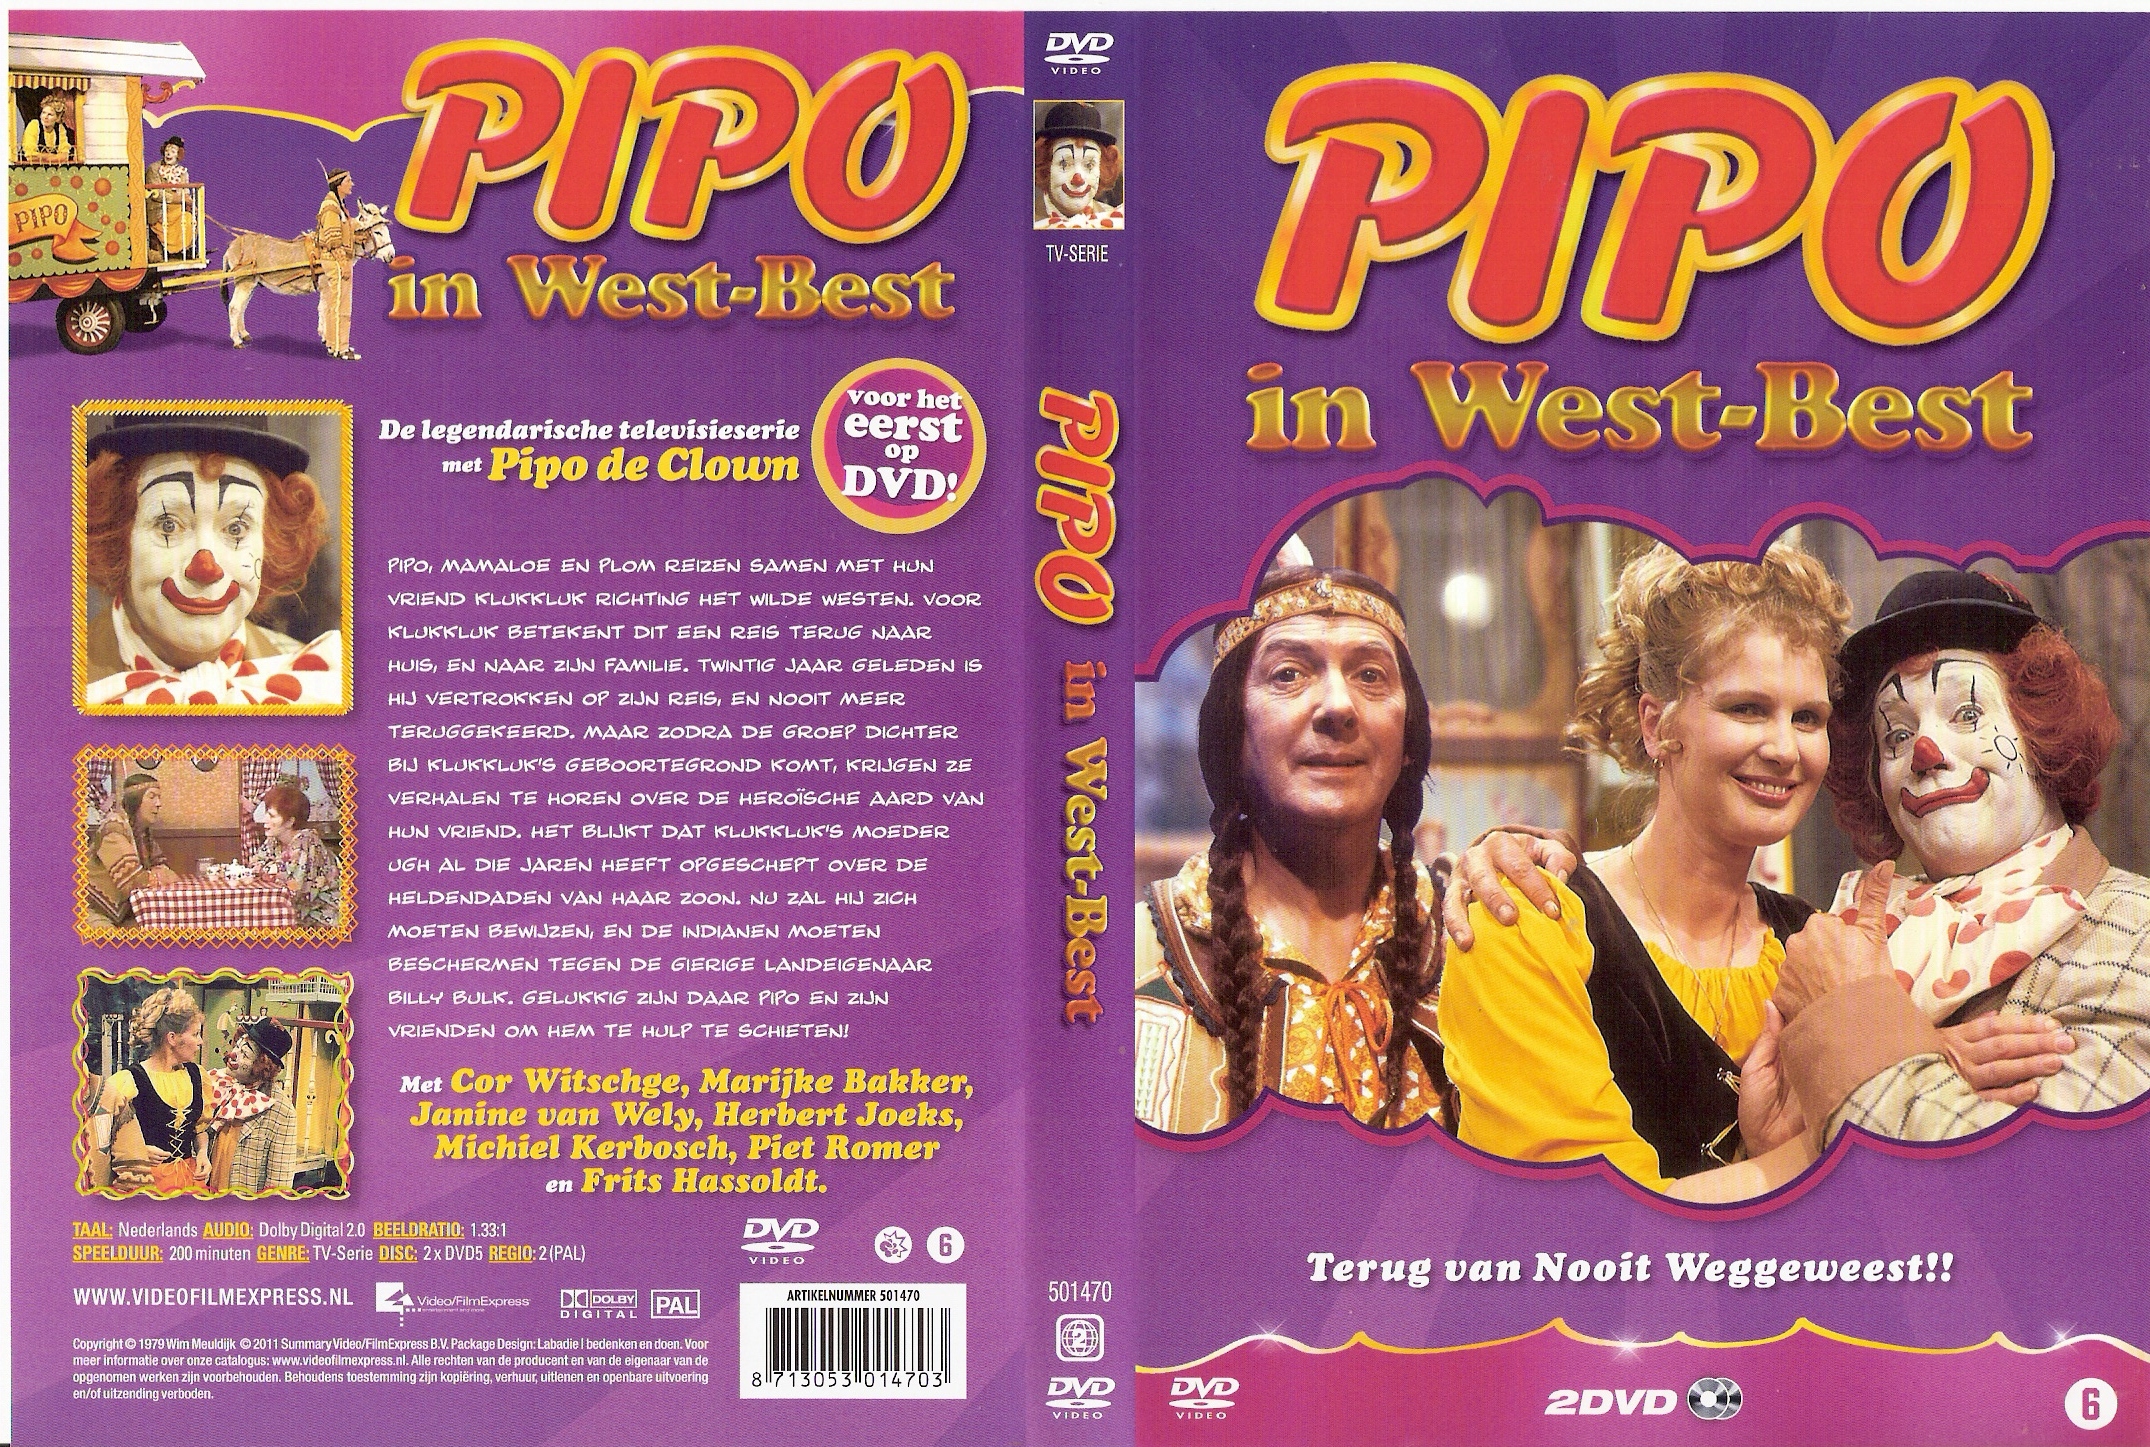 Pipo de Clown West - Best DvD 2